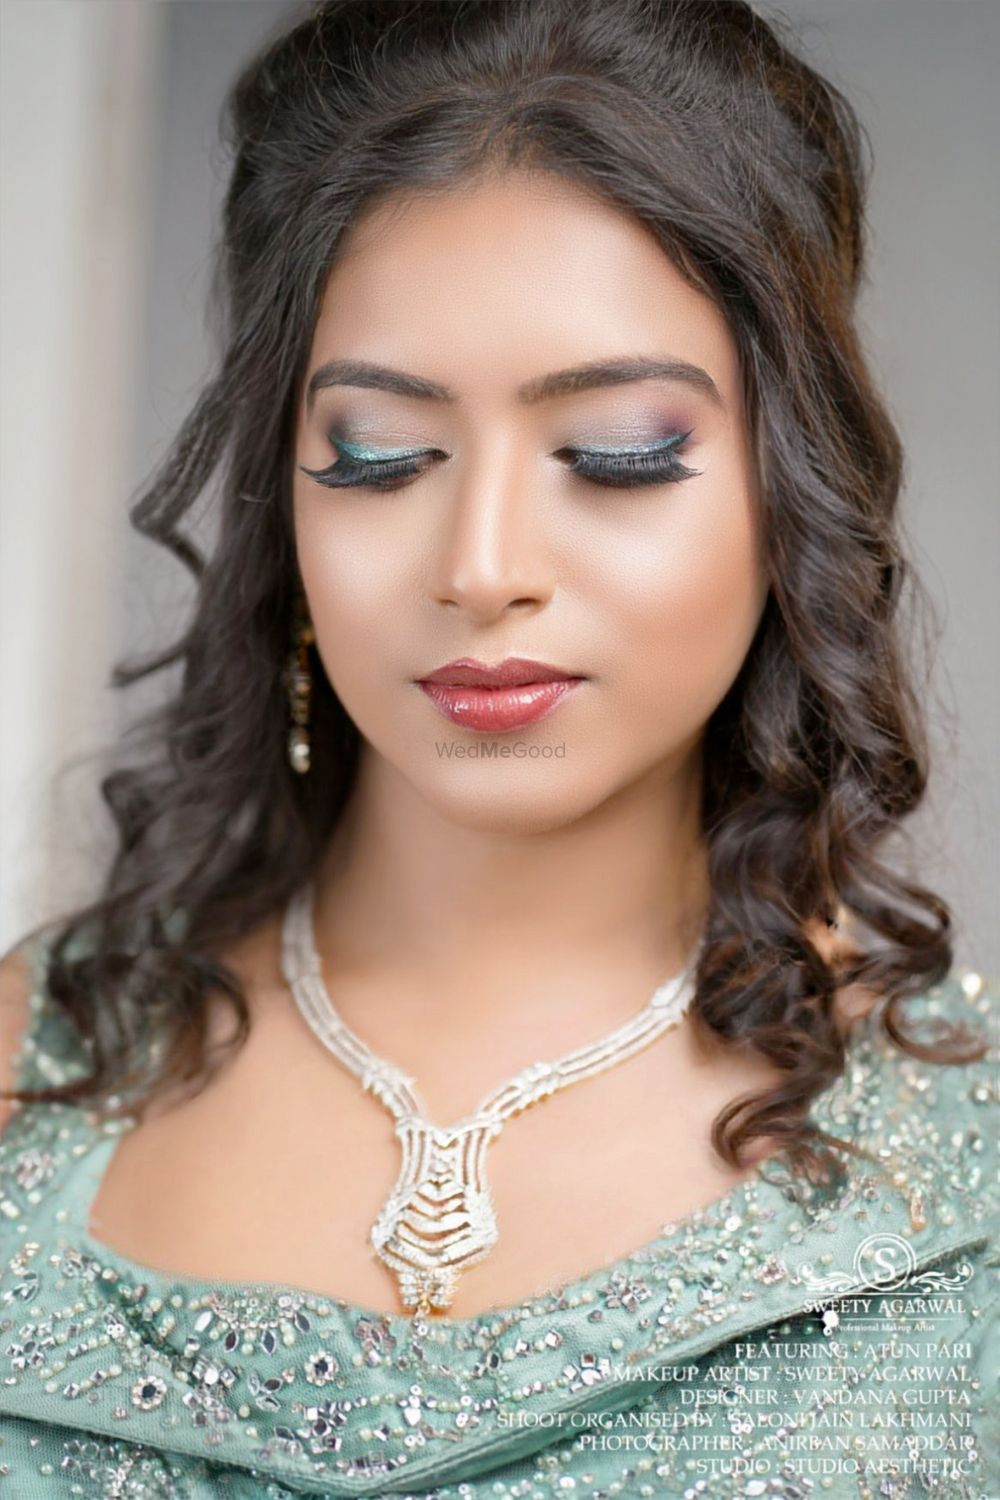 Photo By Makeup By Sweety Agarwal - Bridal Makeup